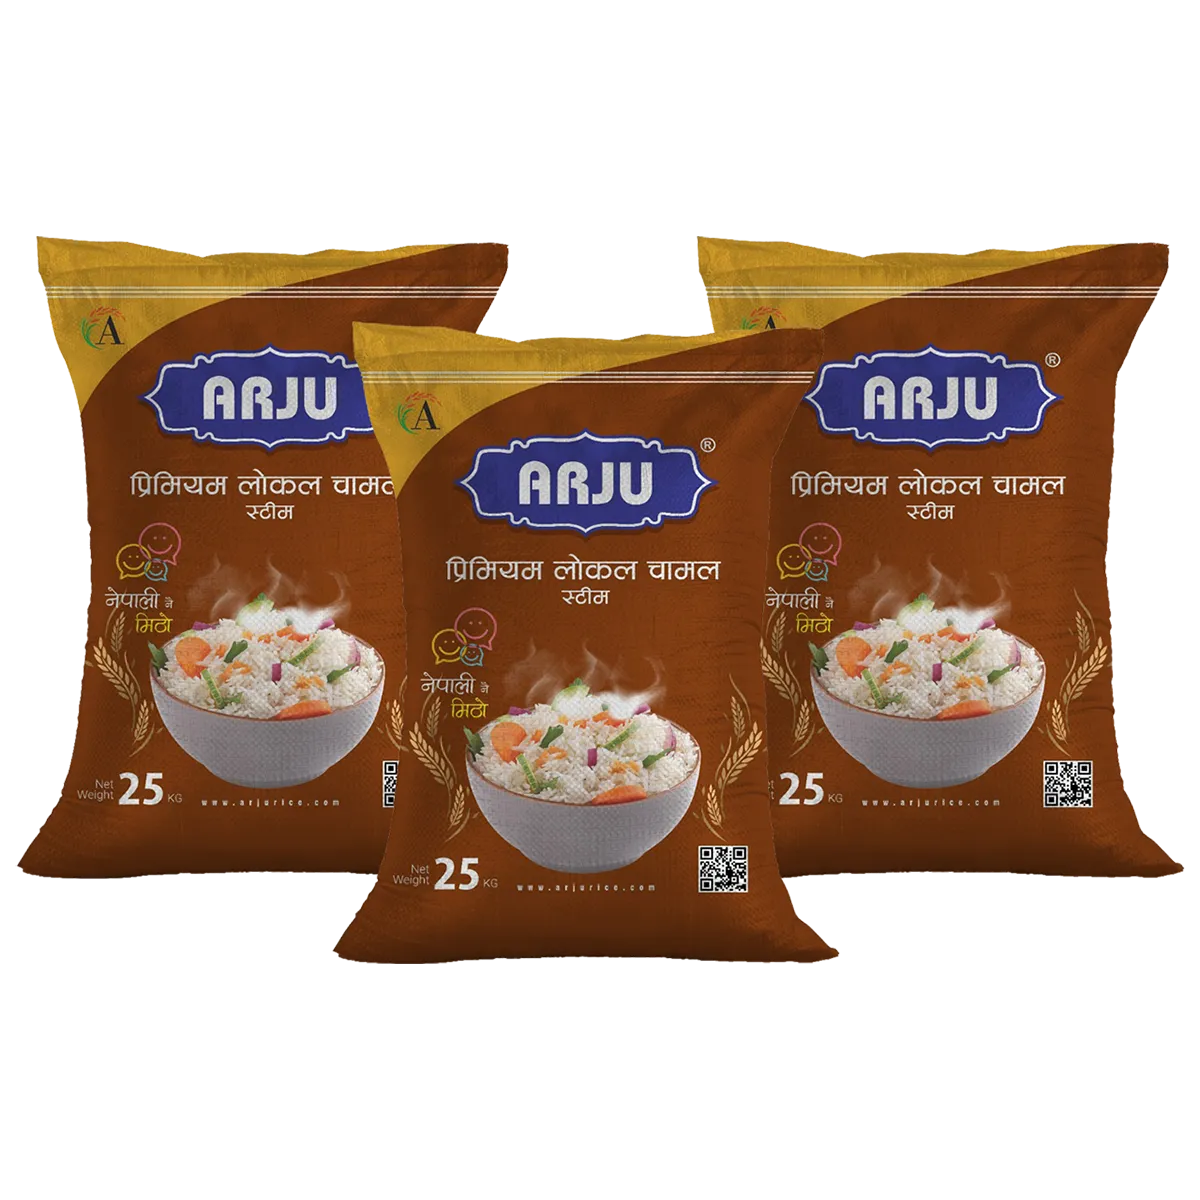 Arju Premium Local Chamal Steam Rice-25Kg